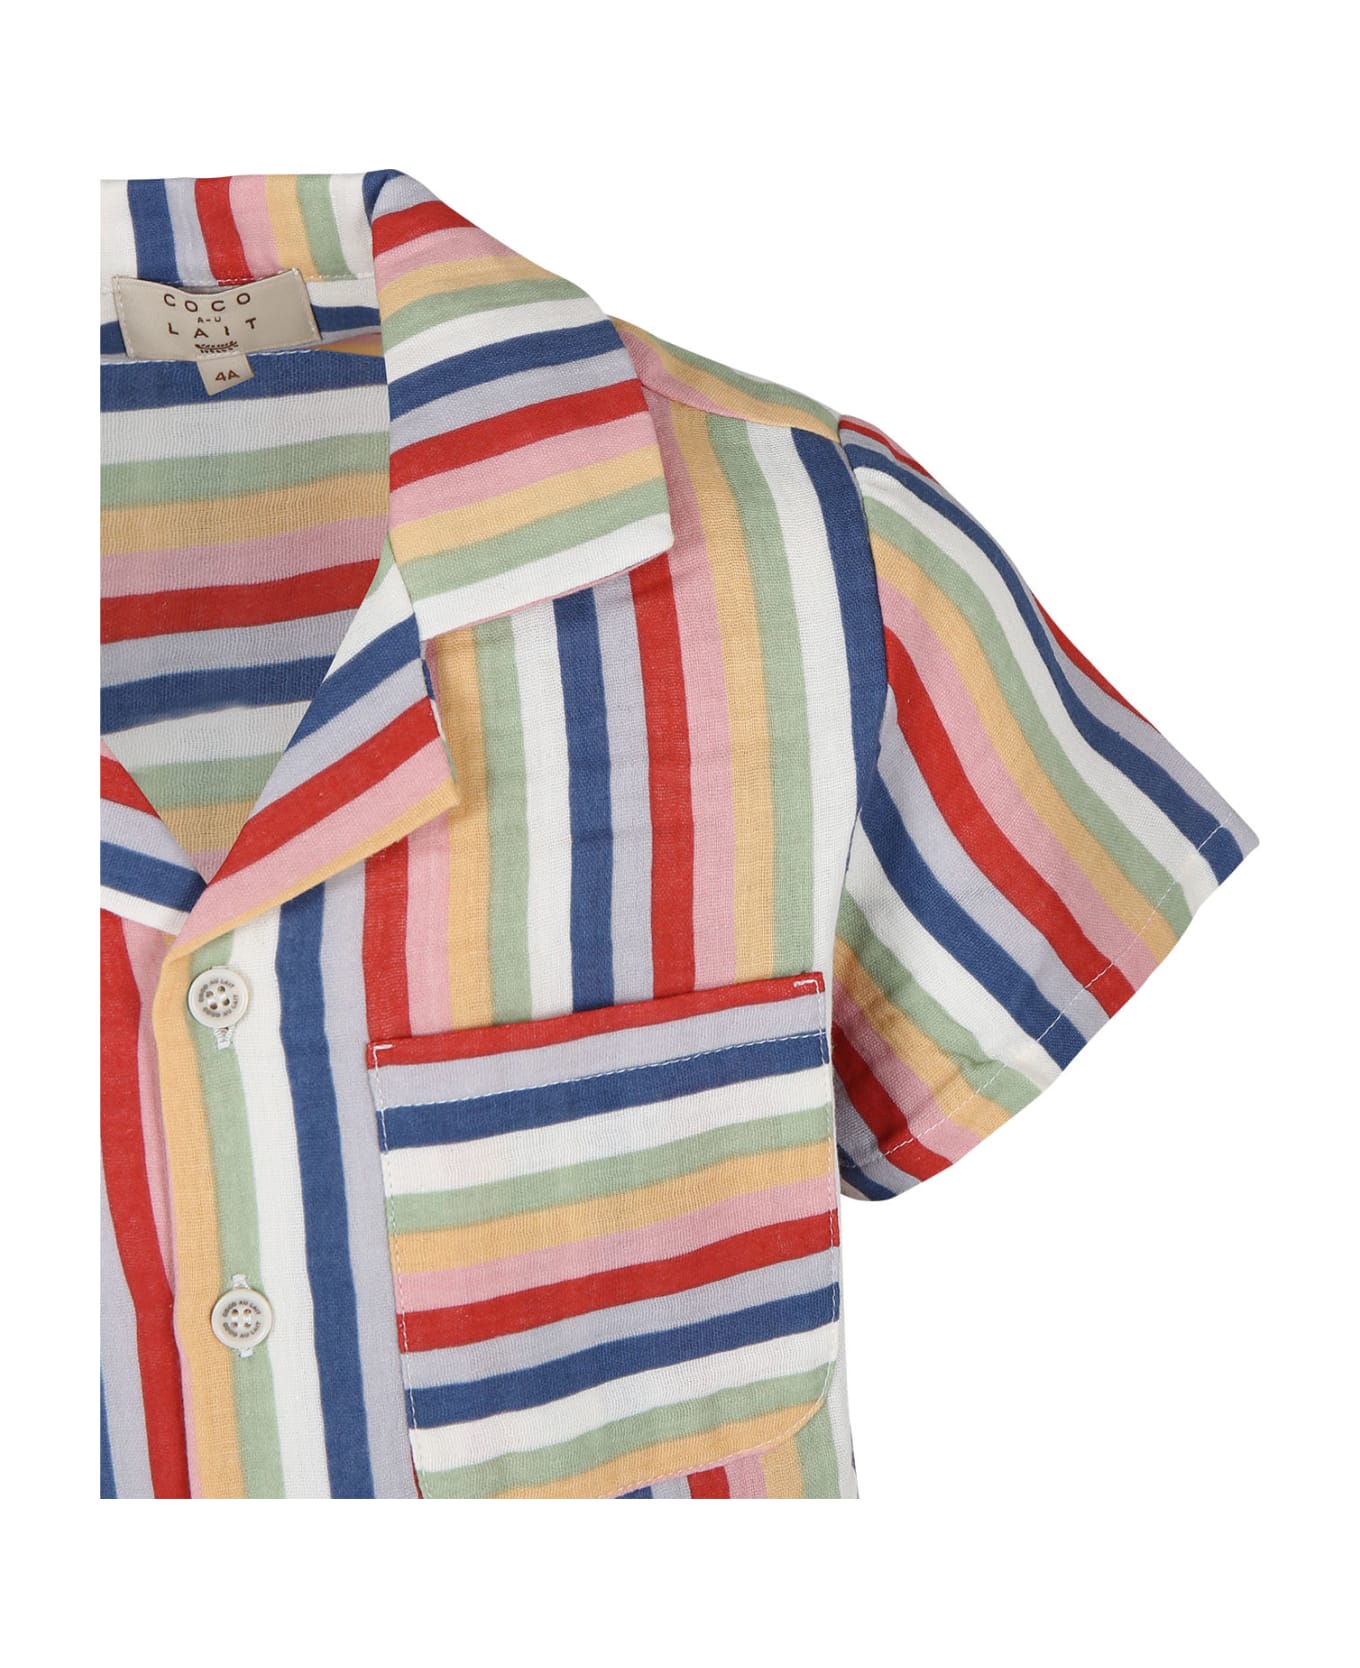 Coco Au Lait Multicolor Shirt For Kids With Stripes Pattern - Multicolor